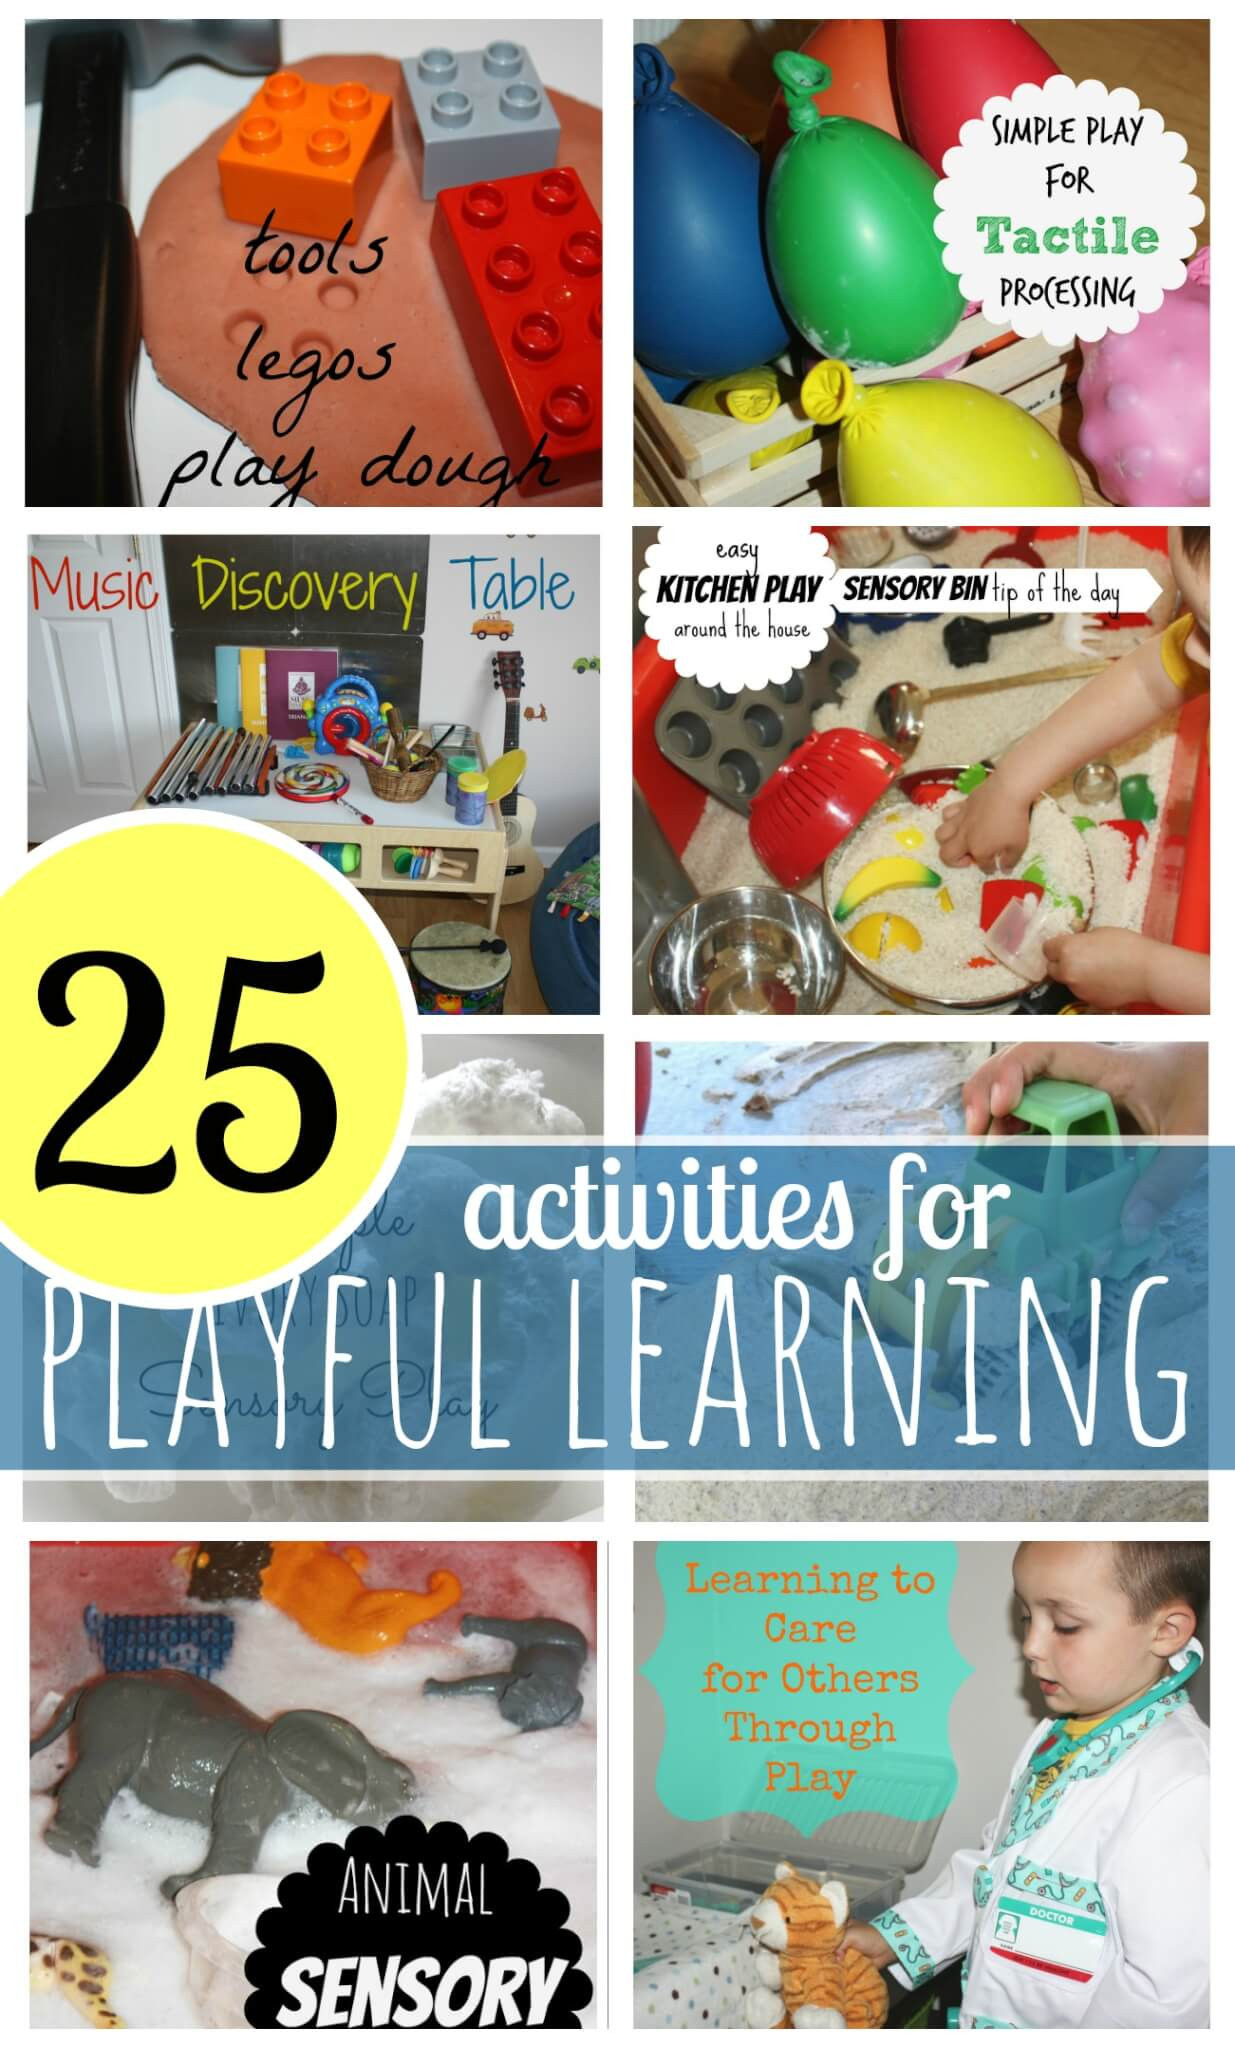 Fun Preschool Crafts
 Playful Learning Preschool Activities